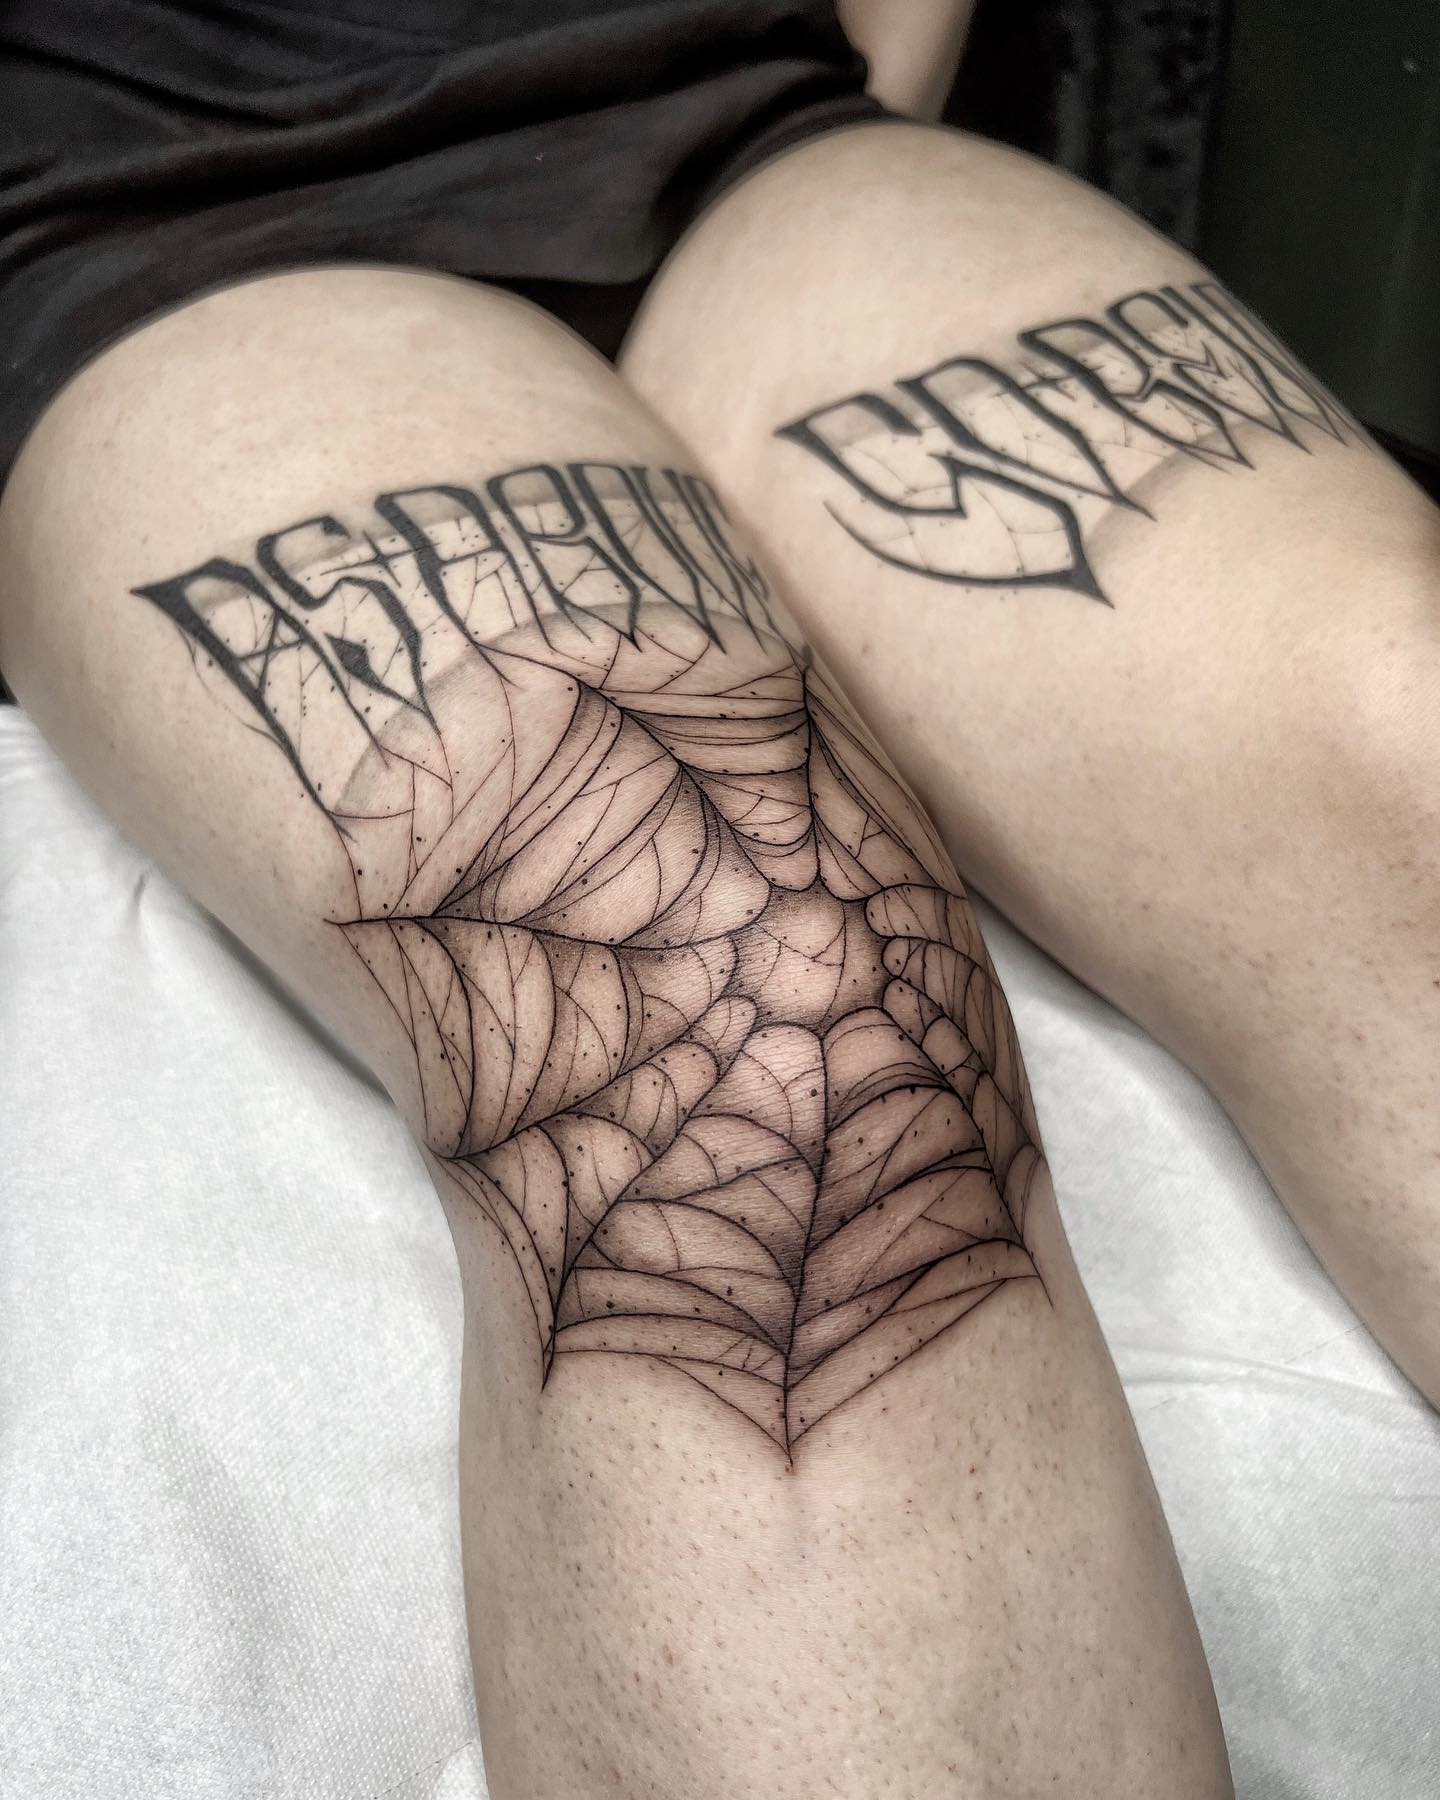 Rodilla Tatuaje de telaraña de araña.